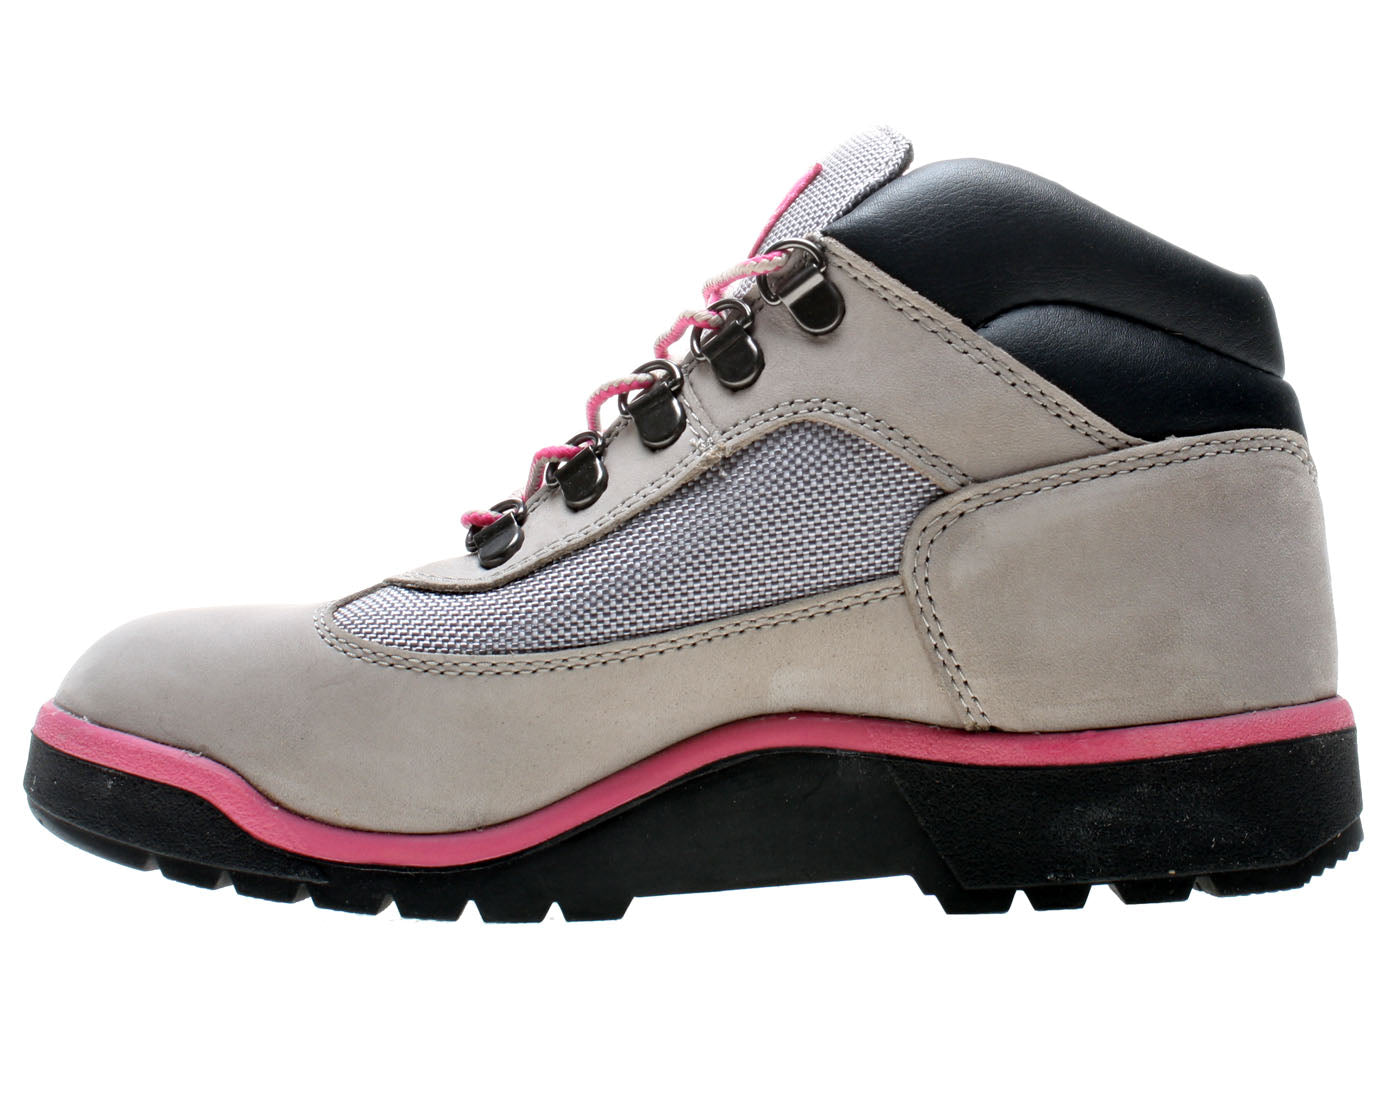 Timberland Field Boot Grey/Pink Junior Girls Boots 3294R